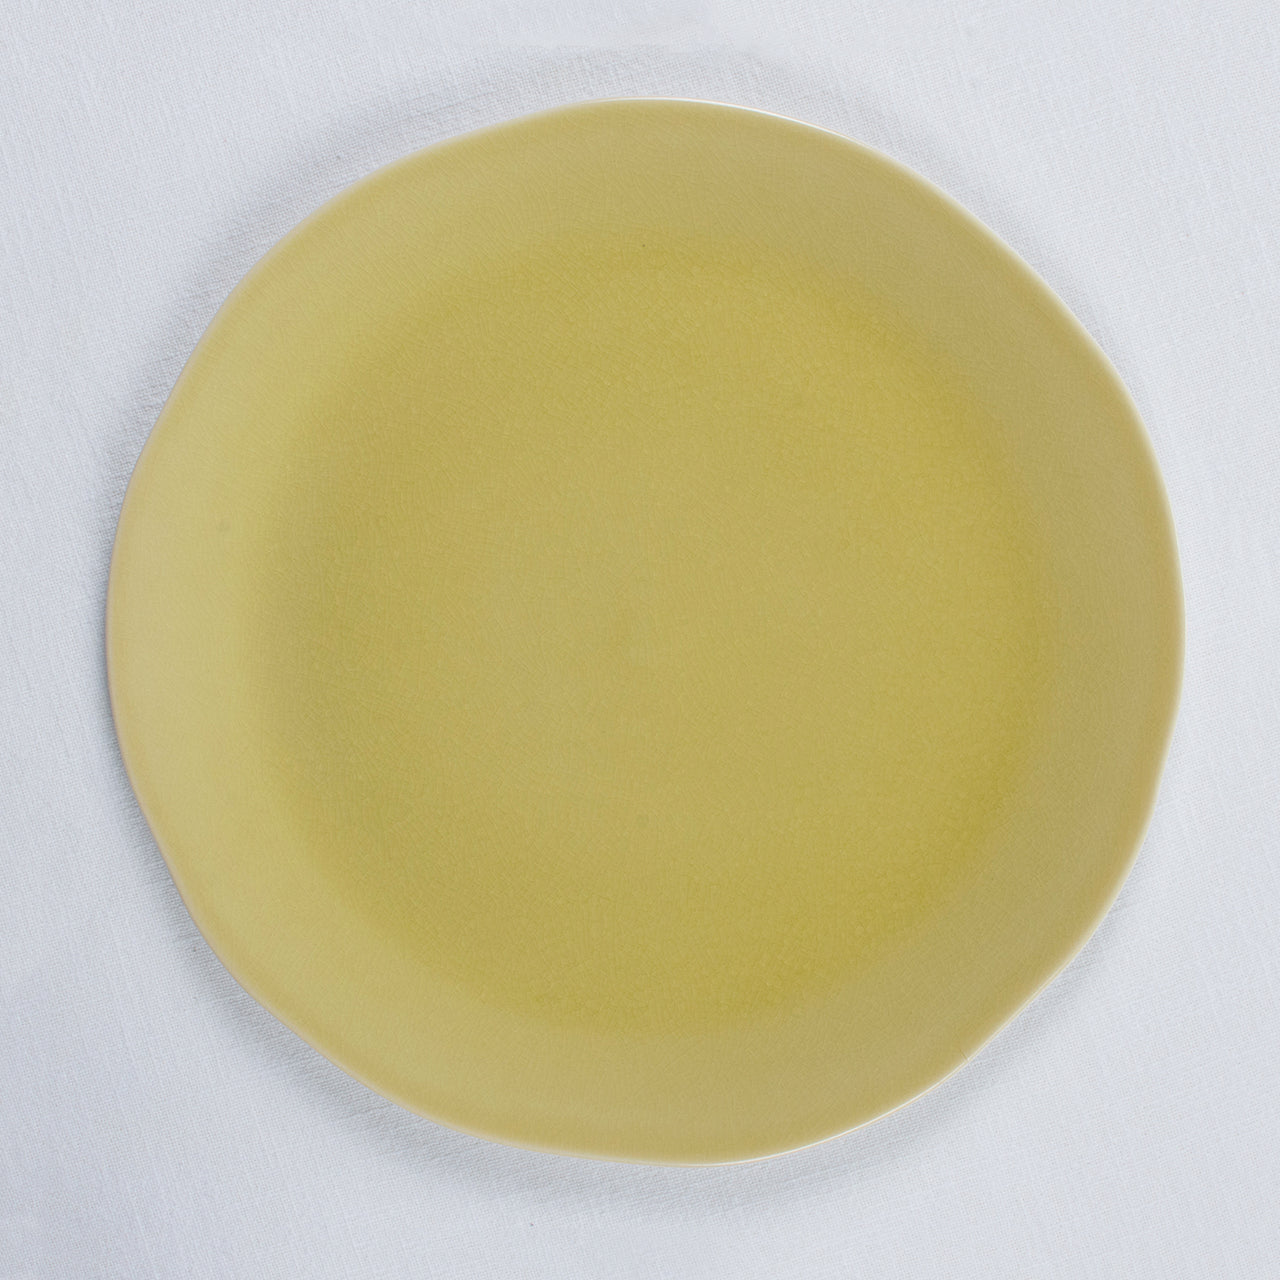 Jars Maguelone Serving Plate / 31cm / Genet